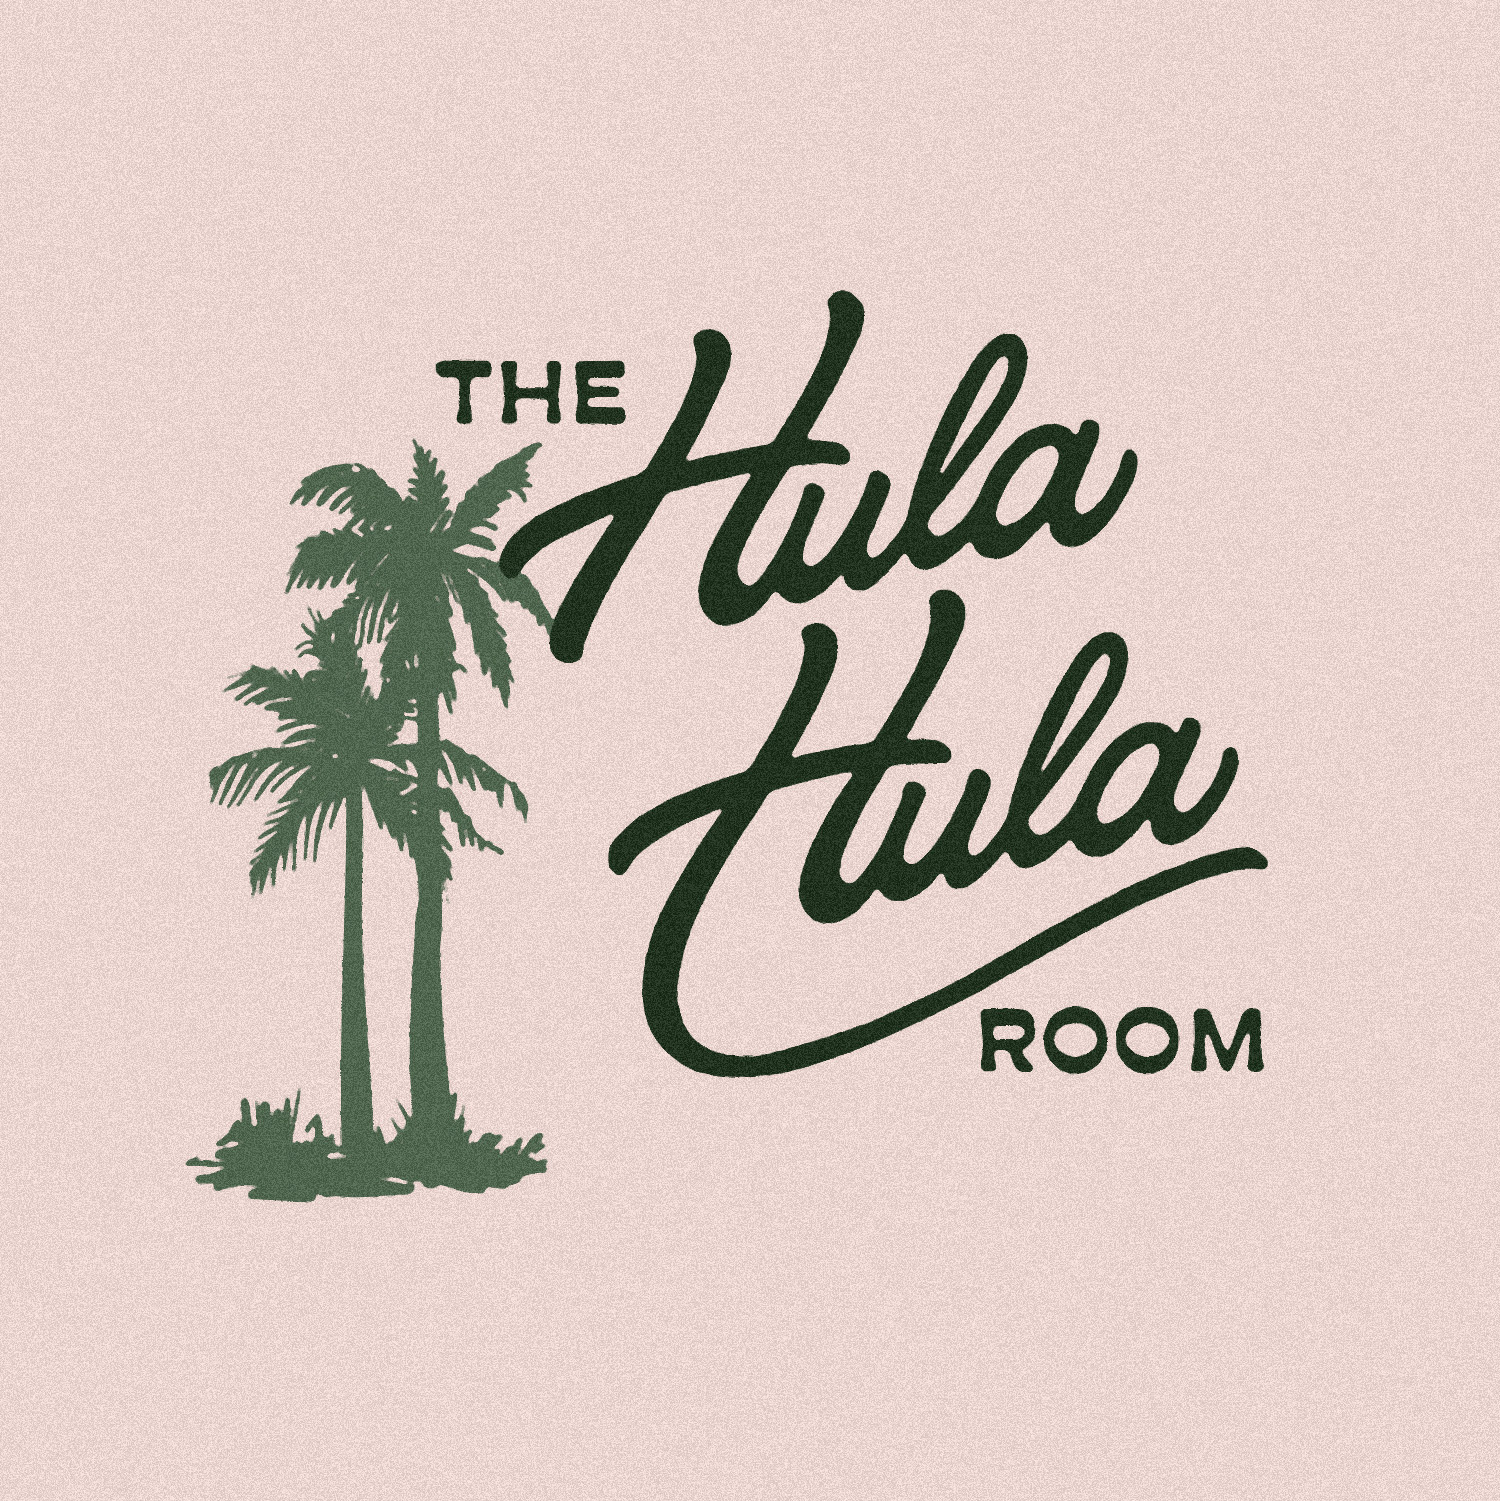 Logo Design for The Hula Hula Room Tiki Bar in Torrance California designed by Stellen Design logo design and branding agency in Los Angeles California specializing in logo design for hospitality brands